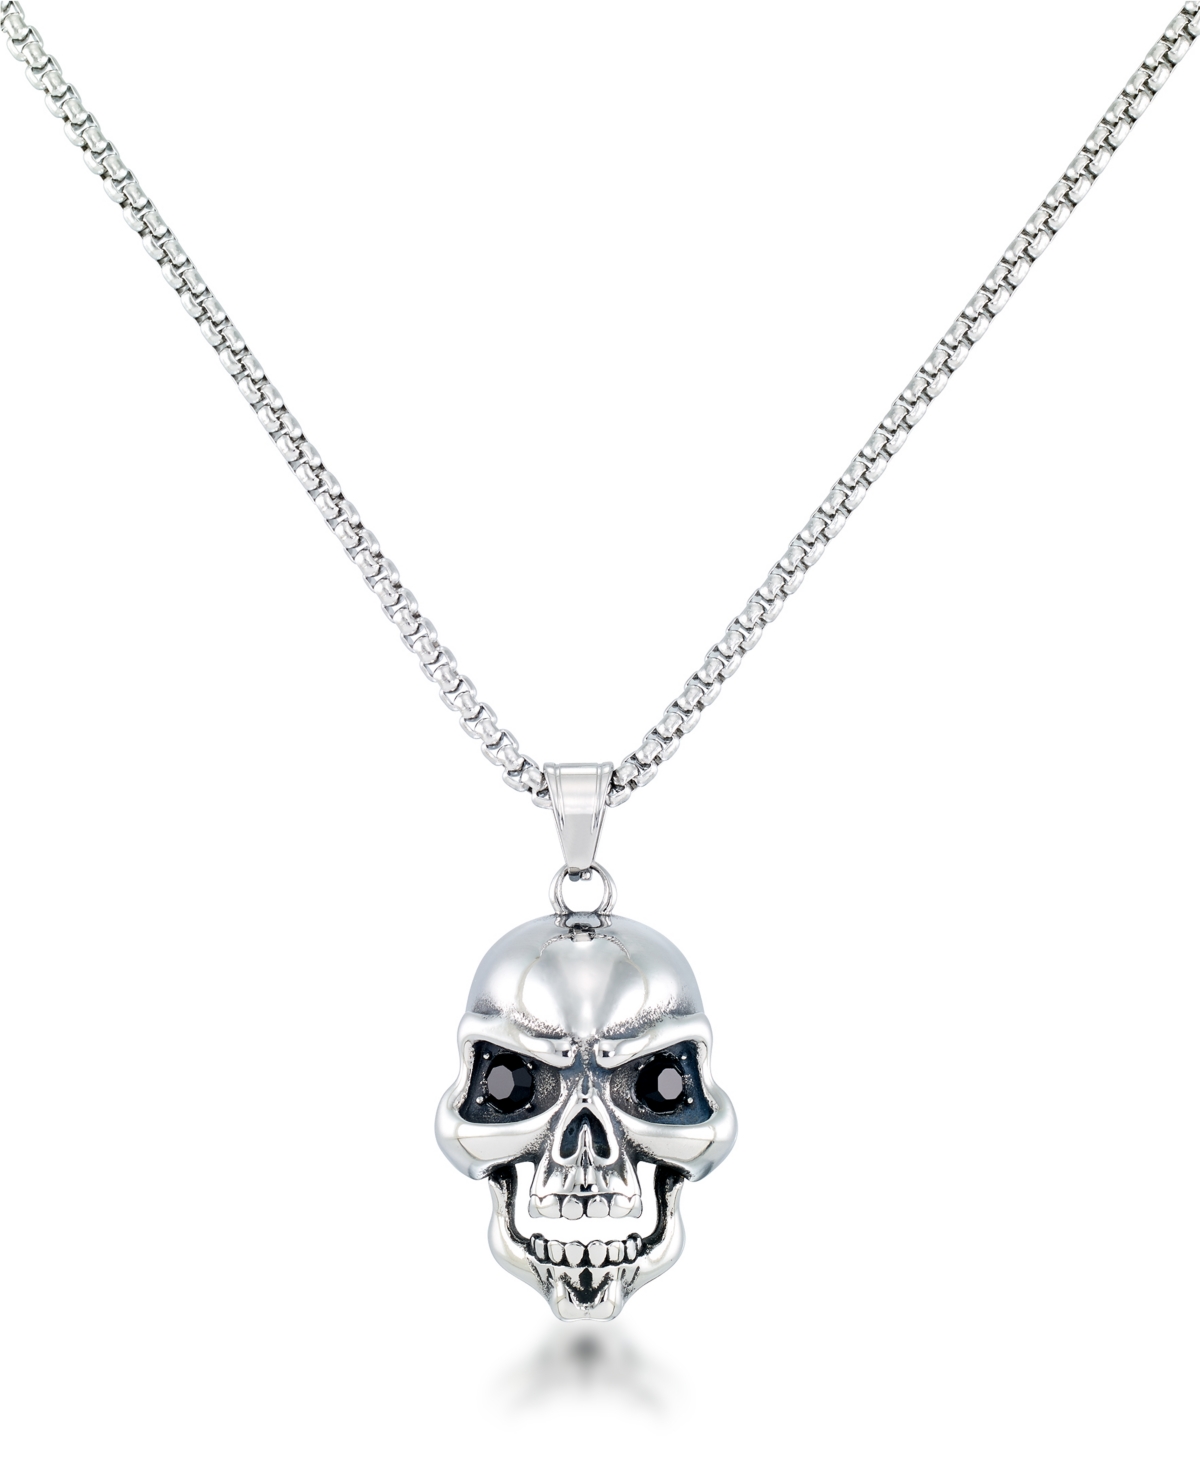 Men's Black Cubic Zirconia Skull 24" Pendant Necklace in Stainless Steel - Stainless Steel